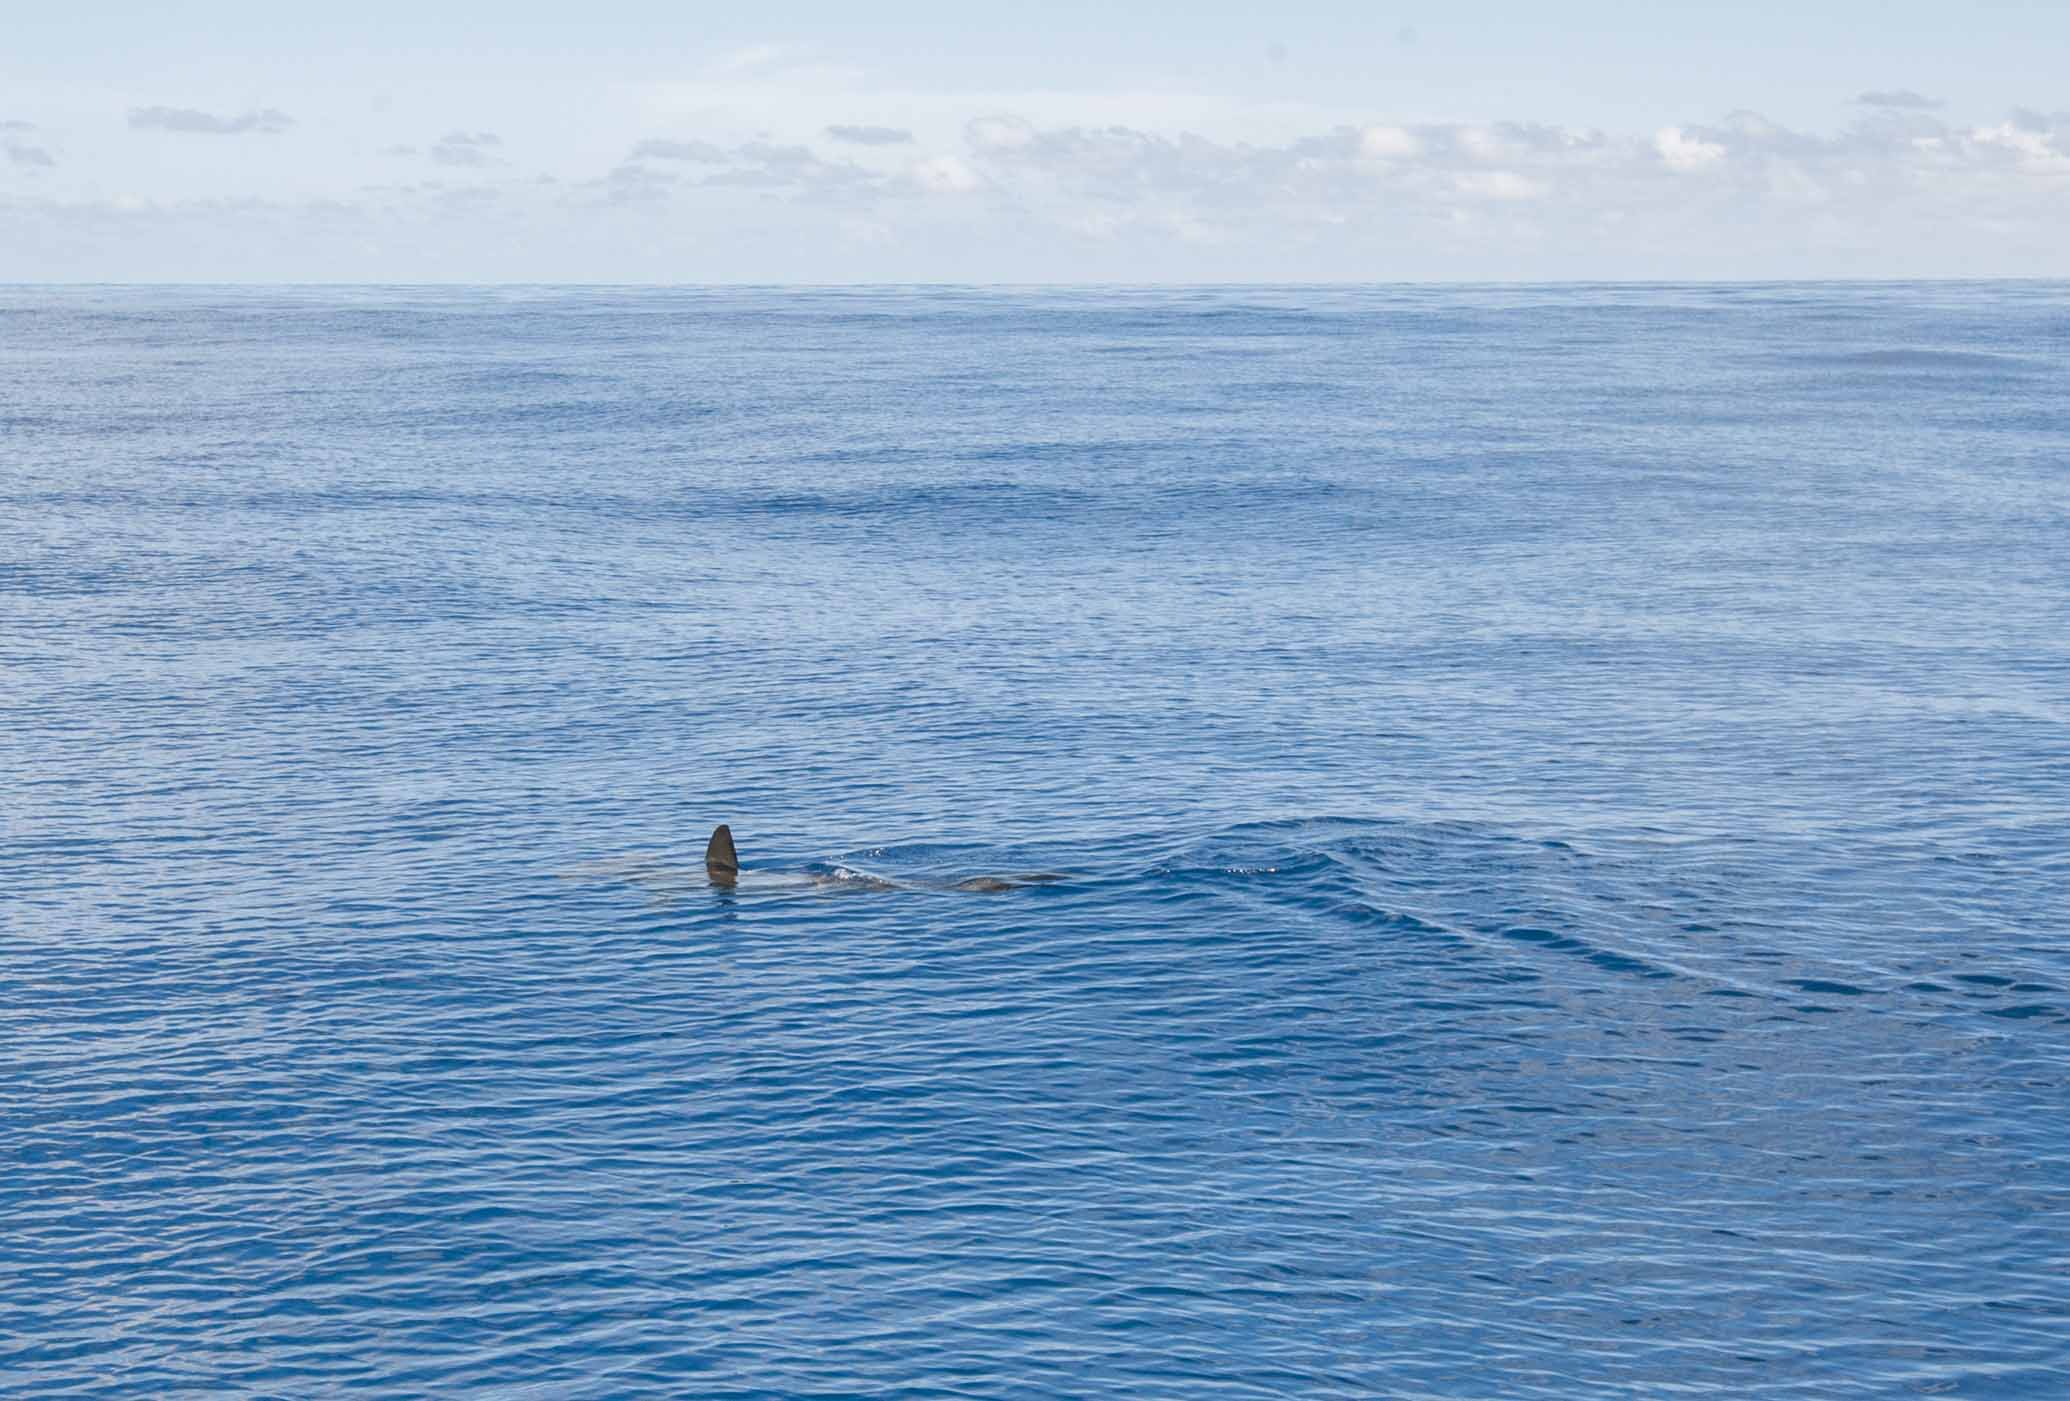 Hammerhead cruising just below the surface in the deep ocean.